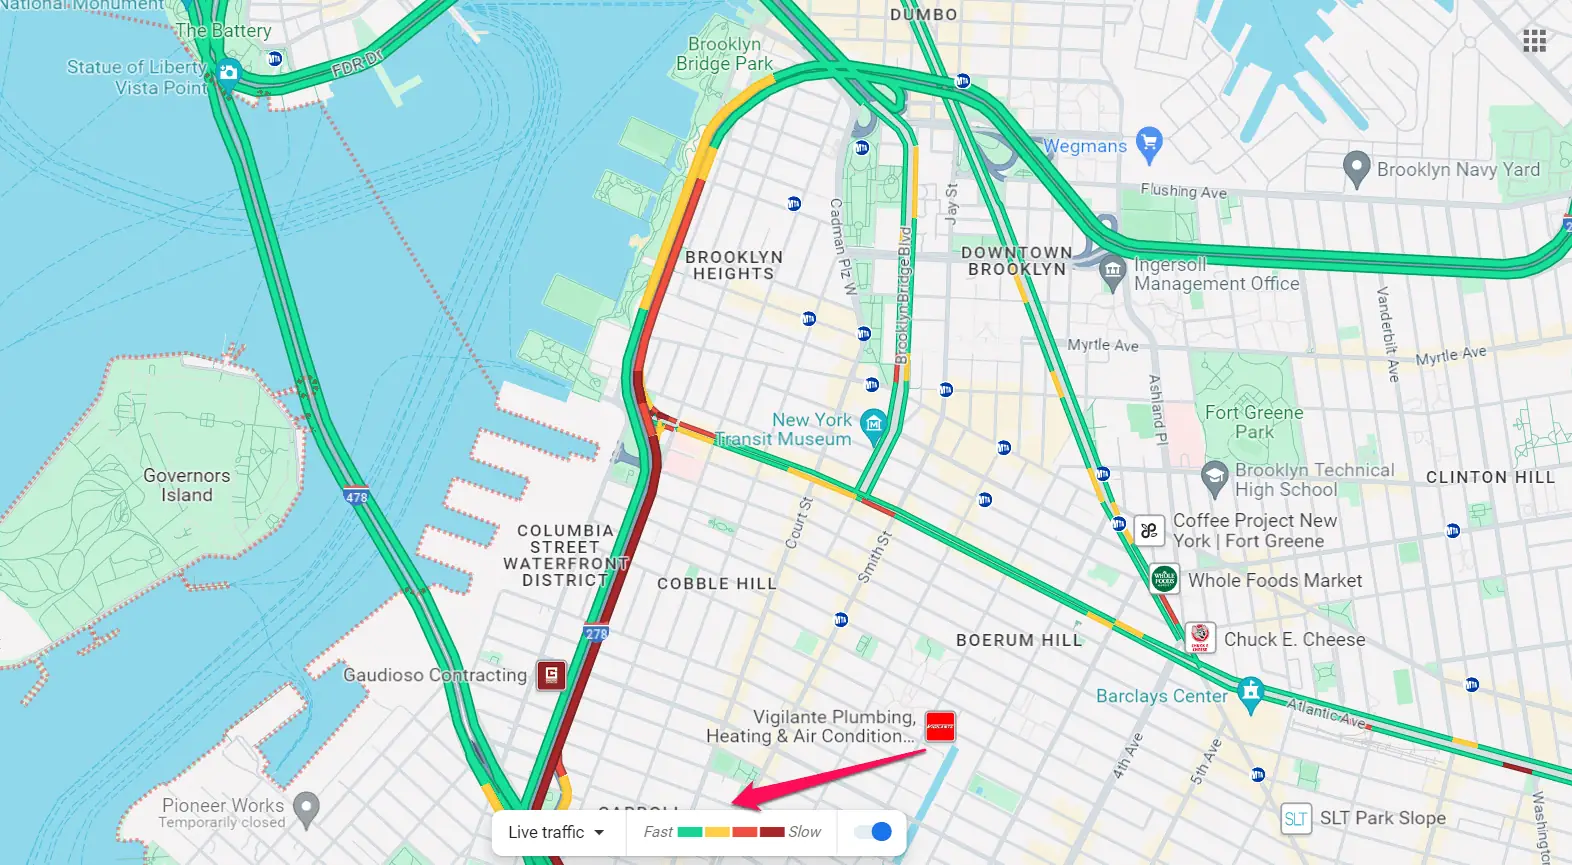 Live traffic in Google Maps